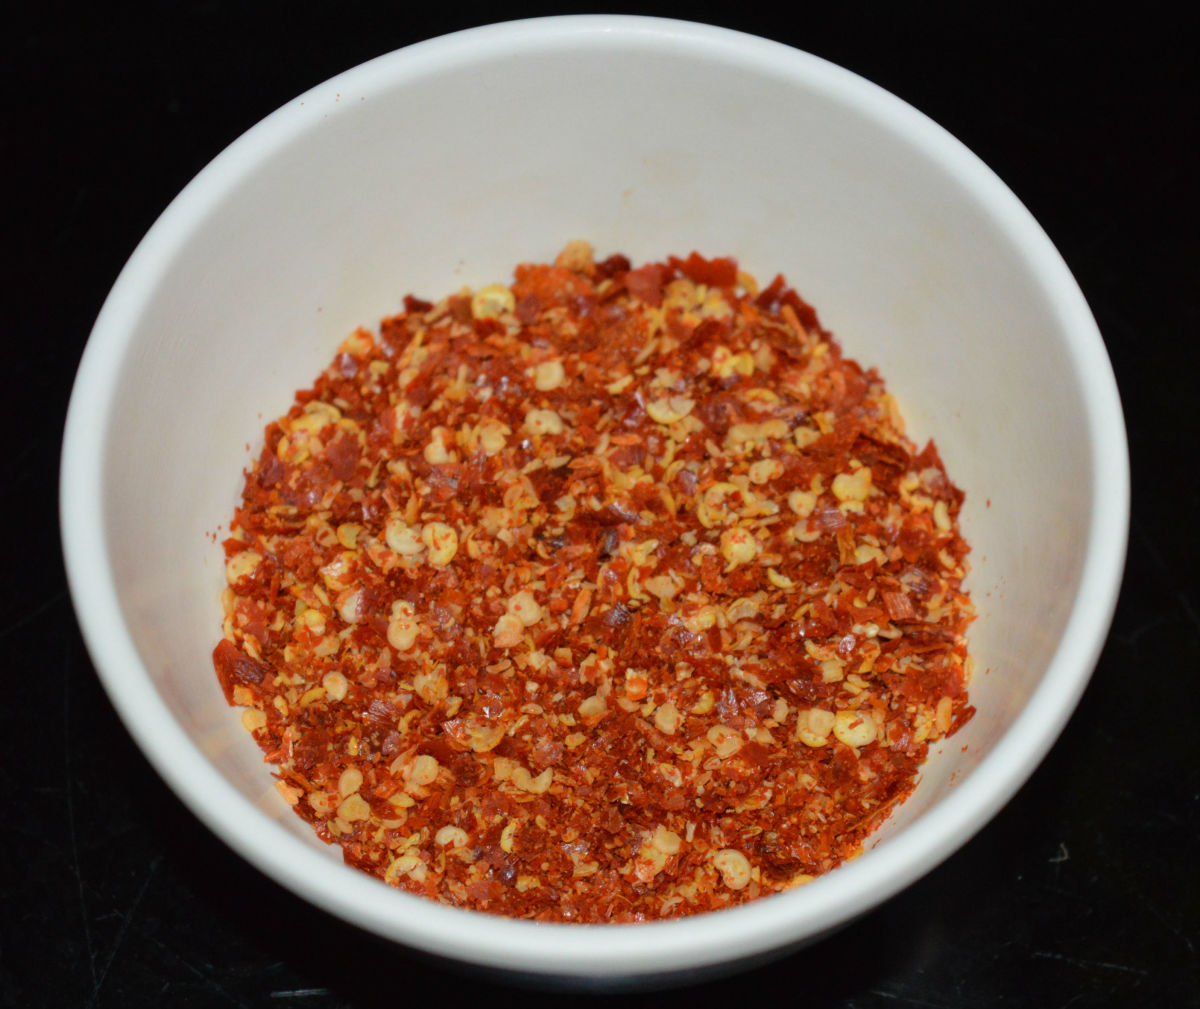 Home-made chili flakes.